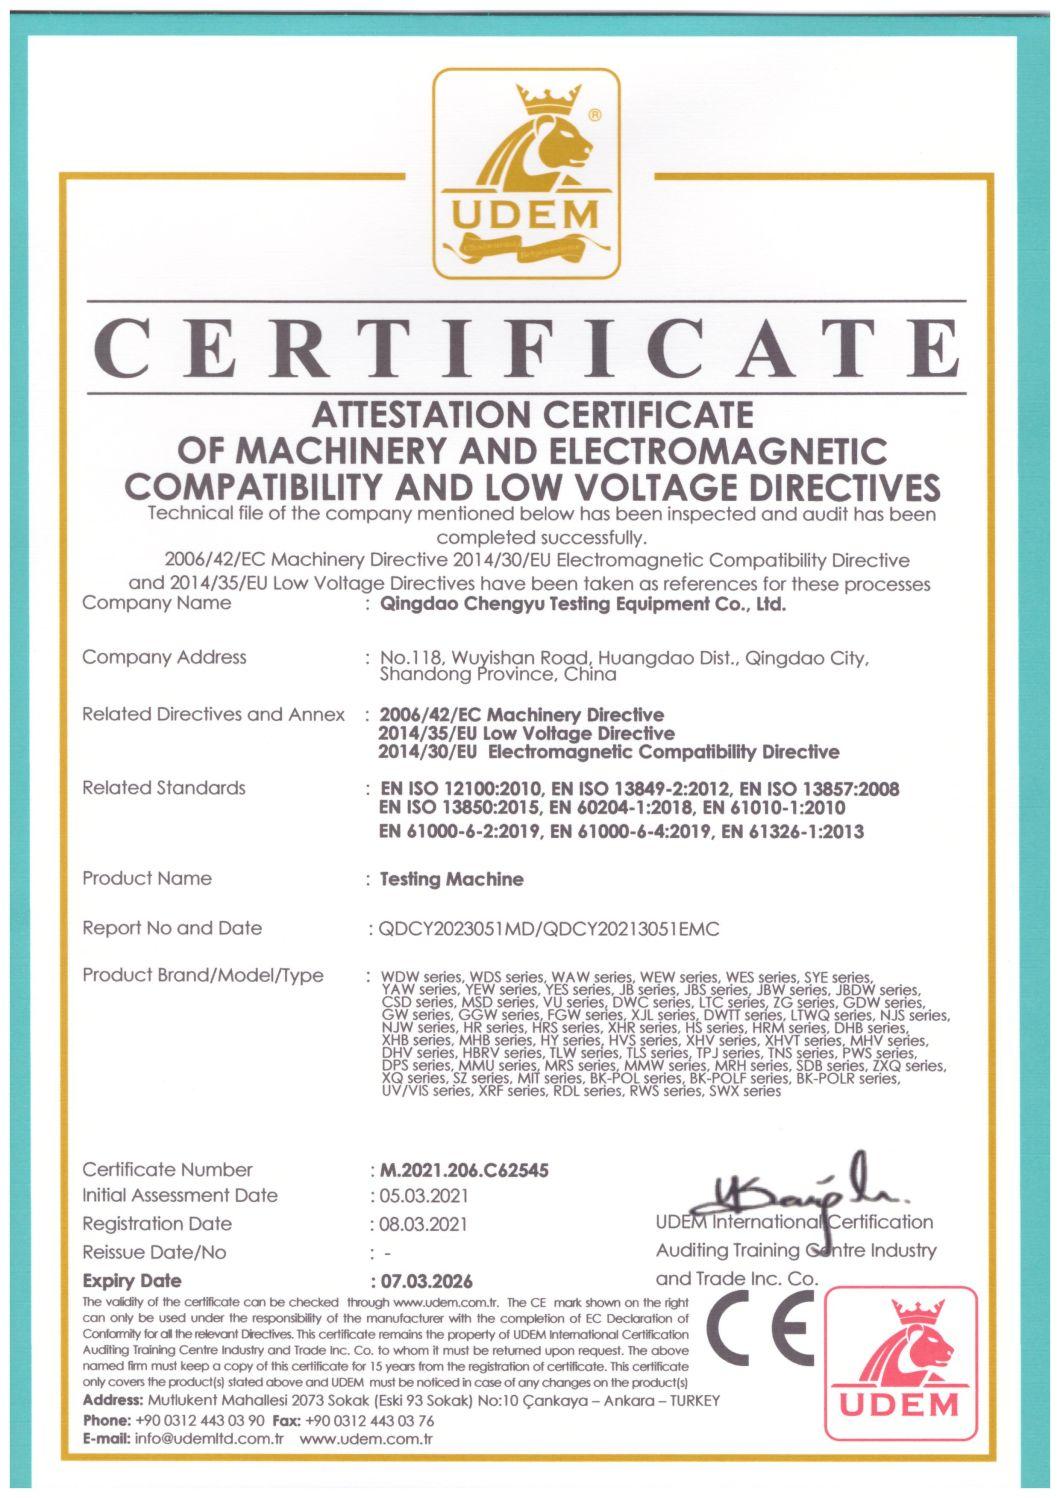 ISO International Standard Certification Digital Compressive Strength Testing Machine for Construction Industry